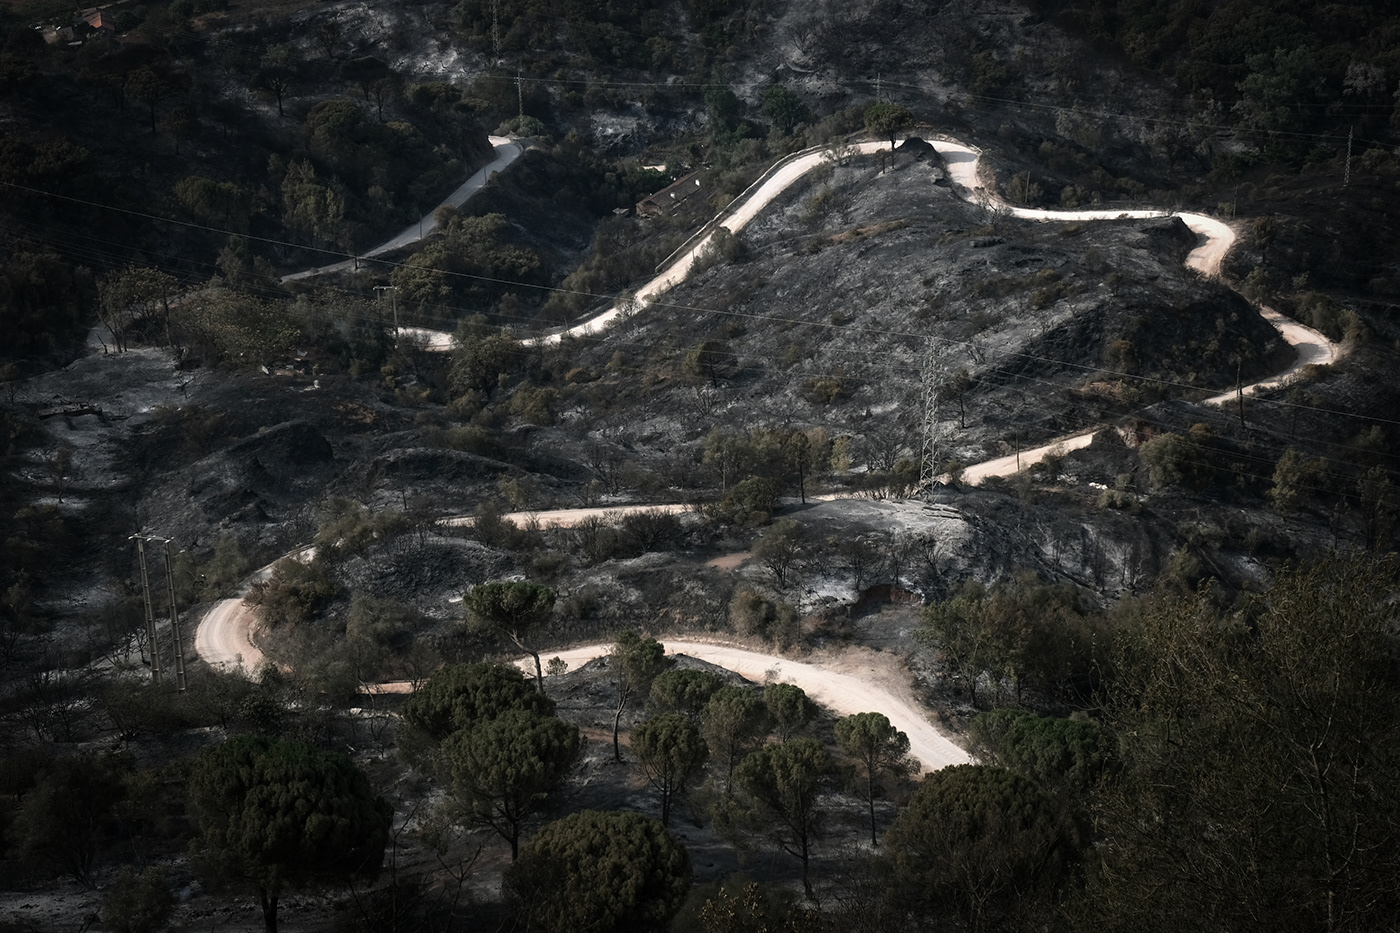 #fotografia #photography editorial palmela Photojornalism Portugal press wildfire